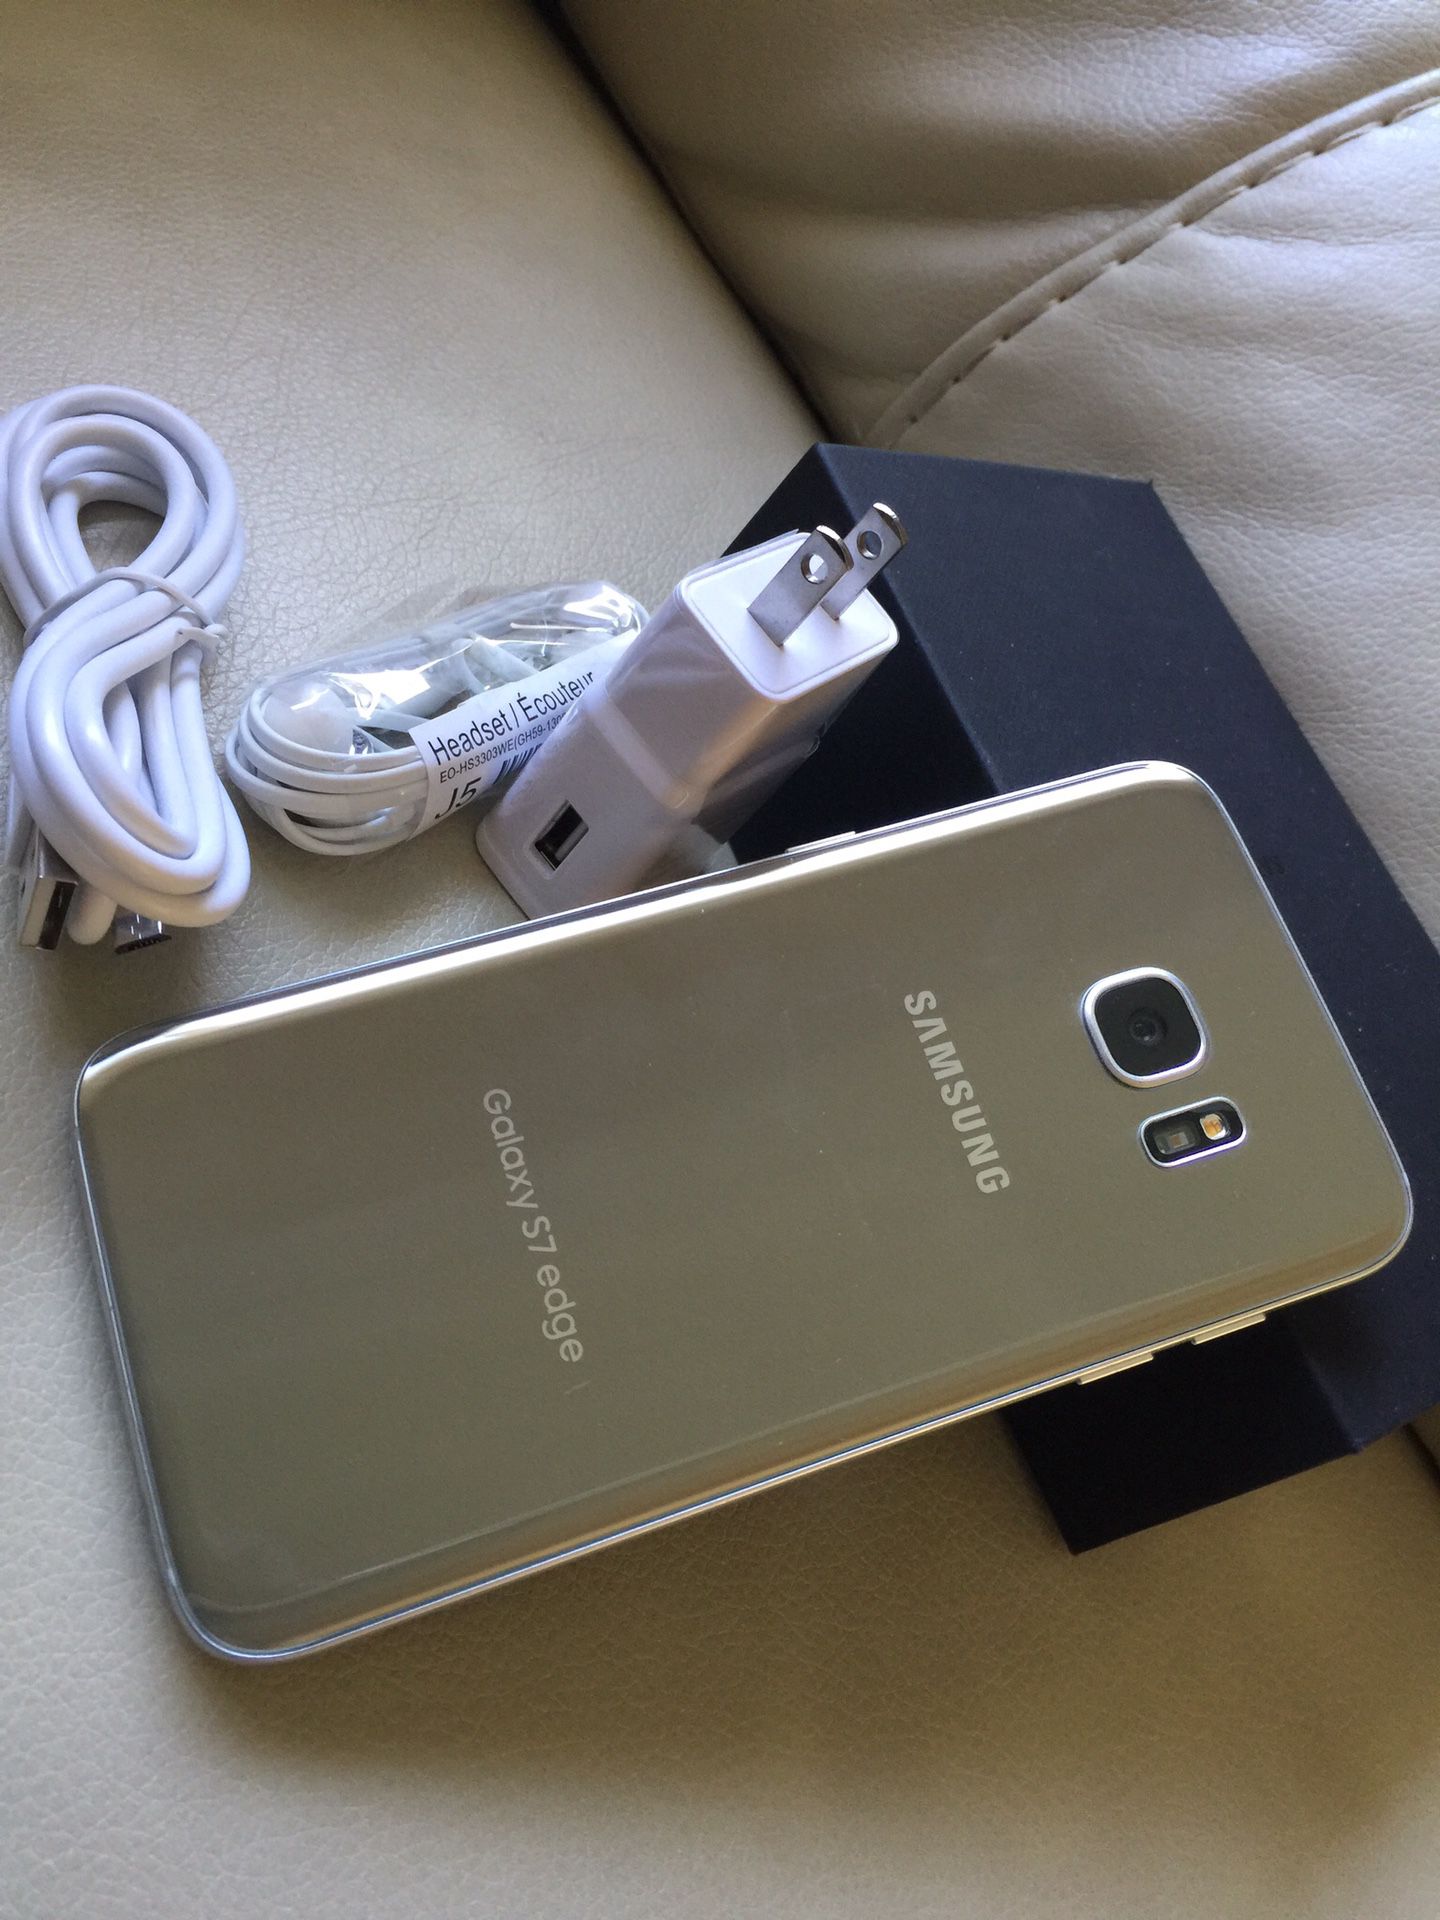 Samsung Galaxy S7 edge,32 GB, excellent condition factory unlocked